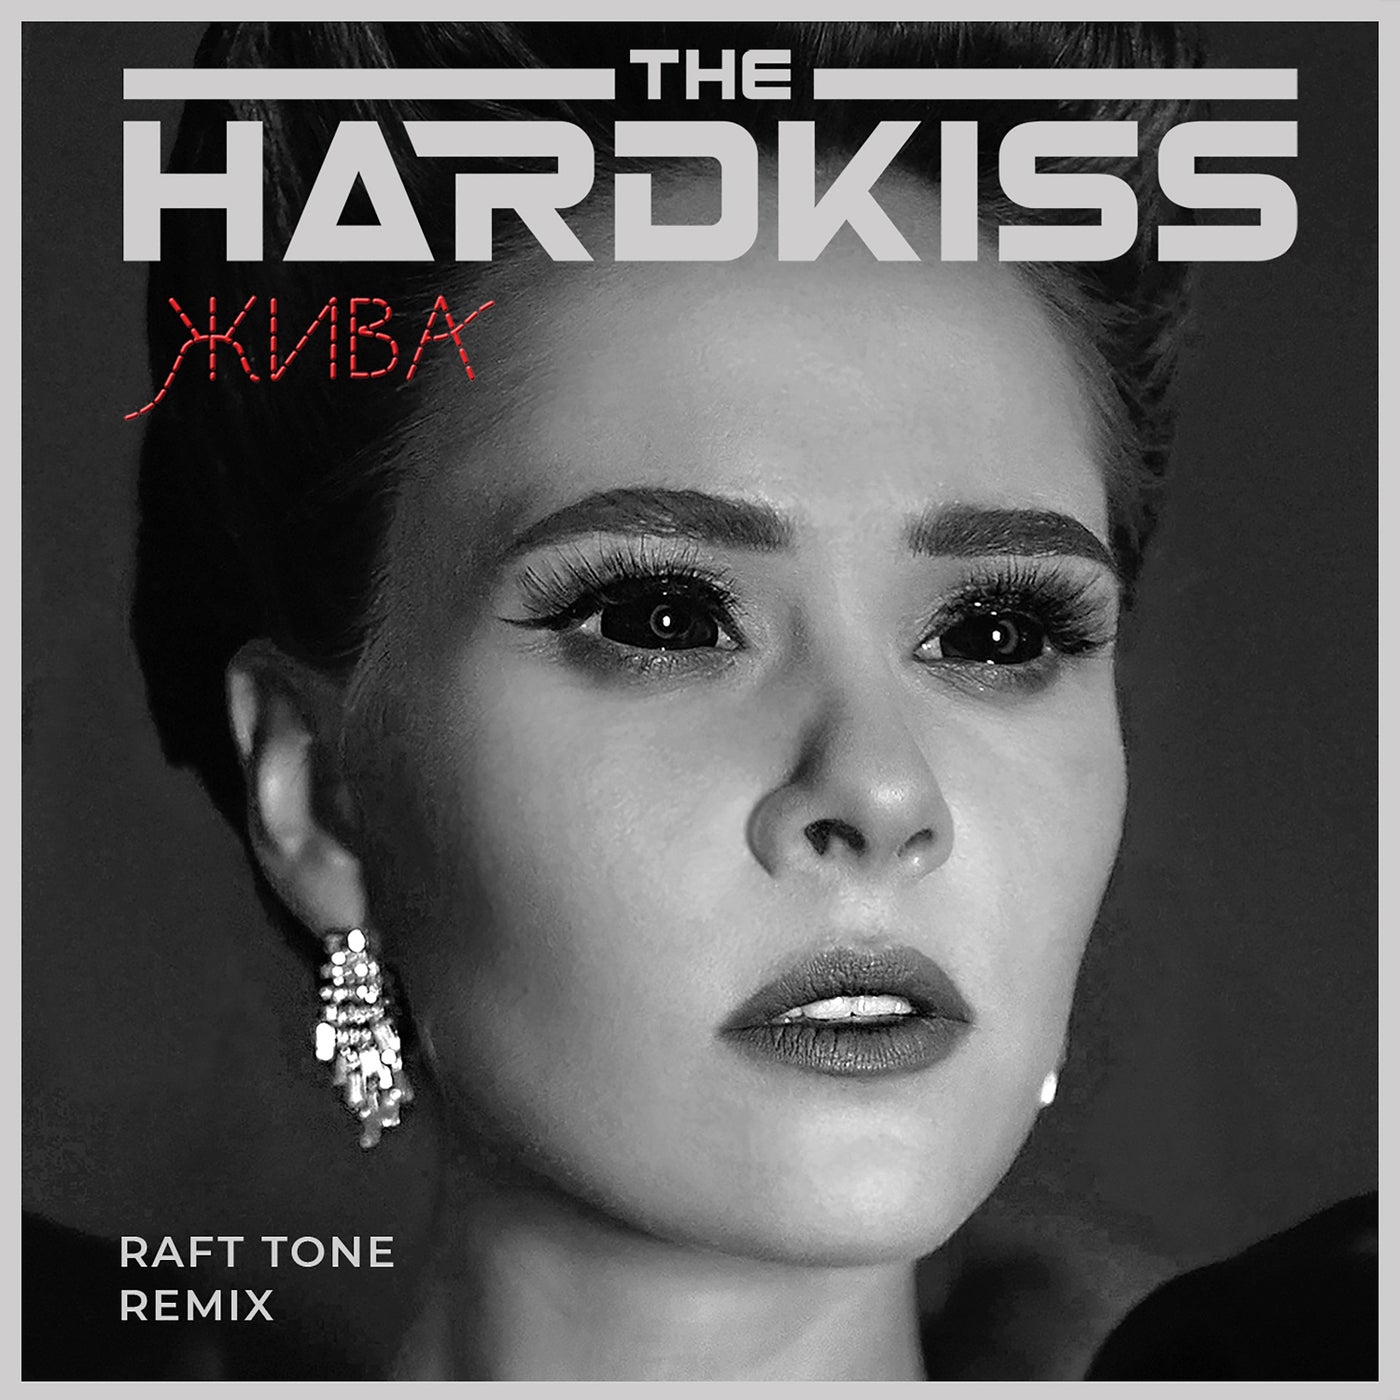 Tone remix. The Hardkiss обложка. The Hardkiss жива. The Hardkiss обложка альбома.